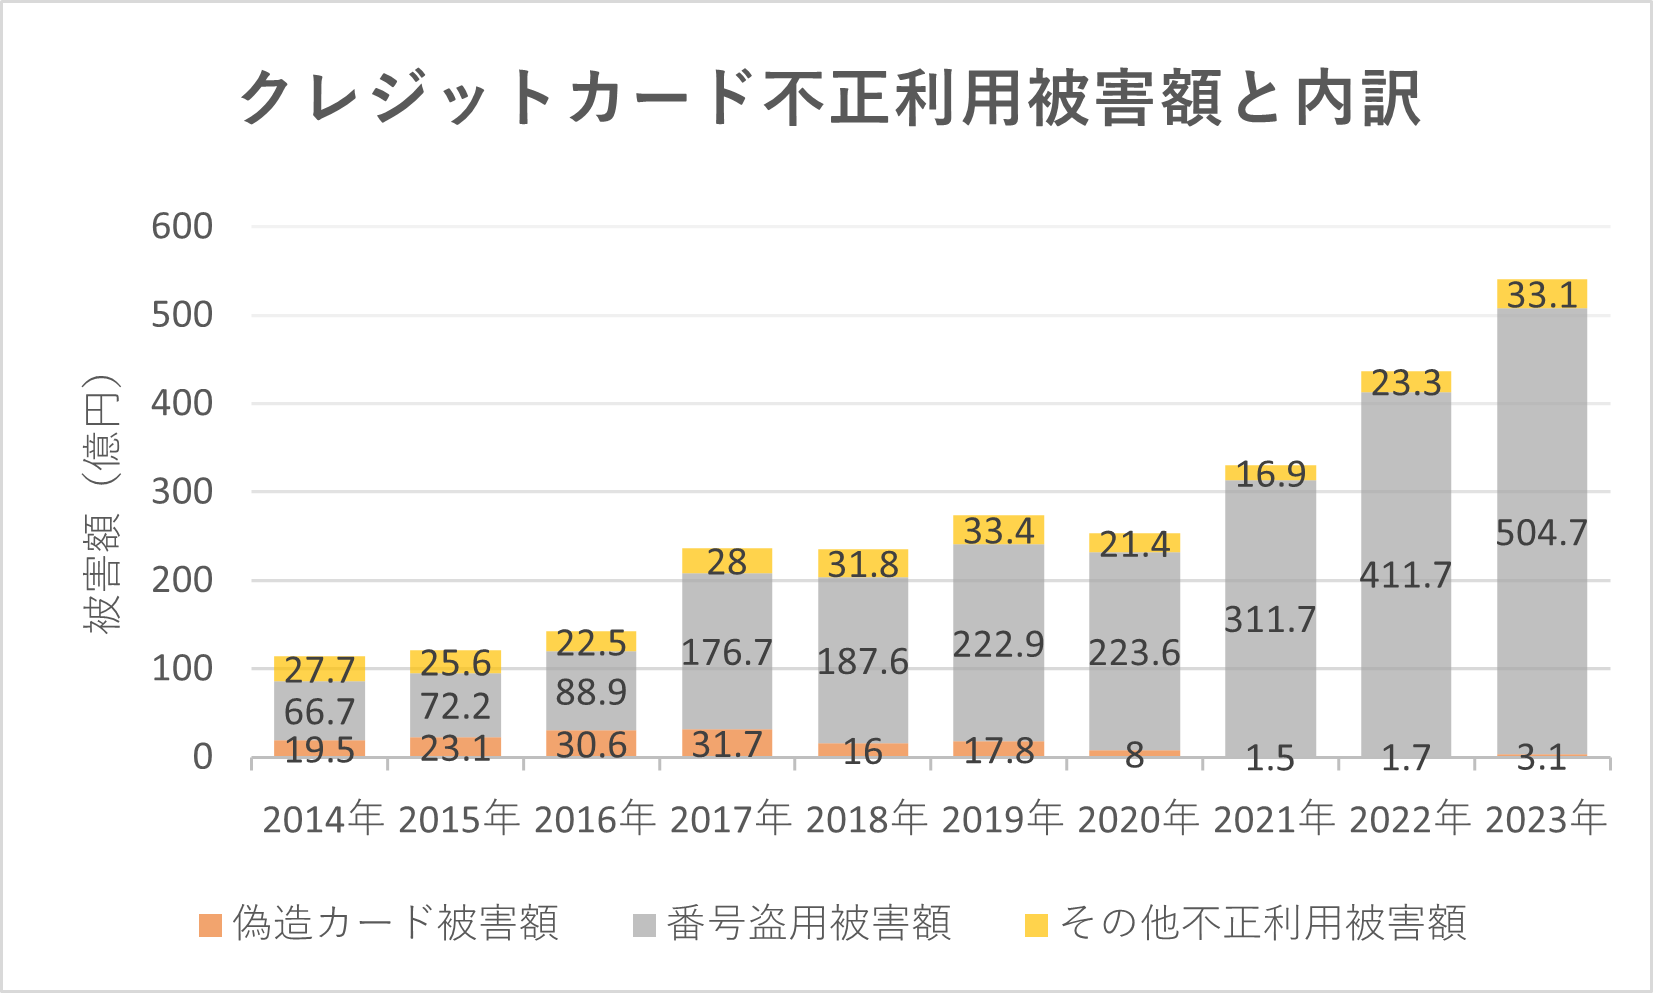 Japan Credit Association survey